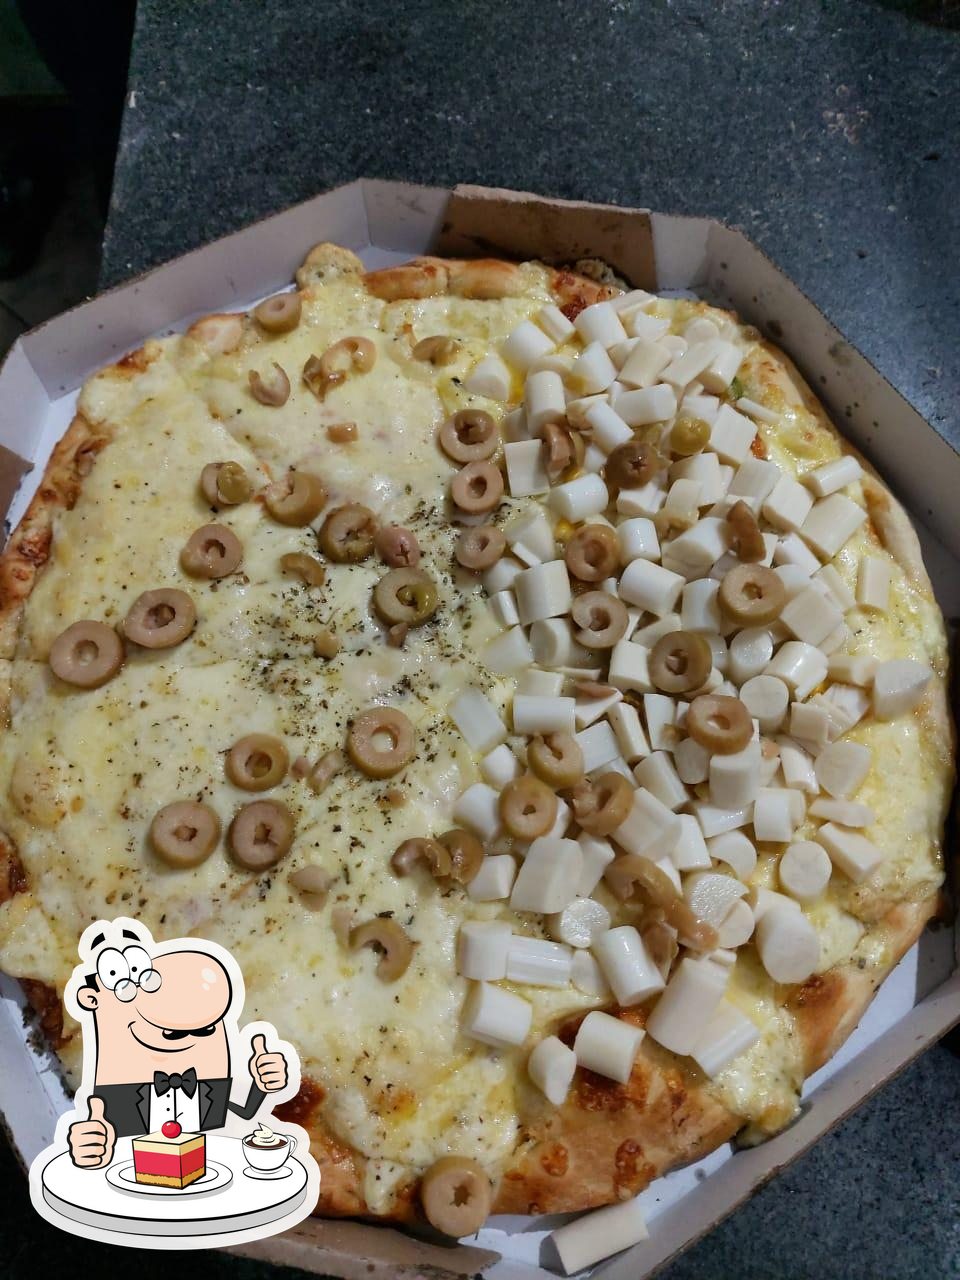 Super Pizza - Morrinhos, GO, Brazil - Pizza place